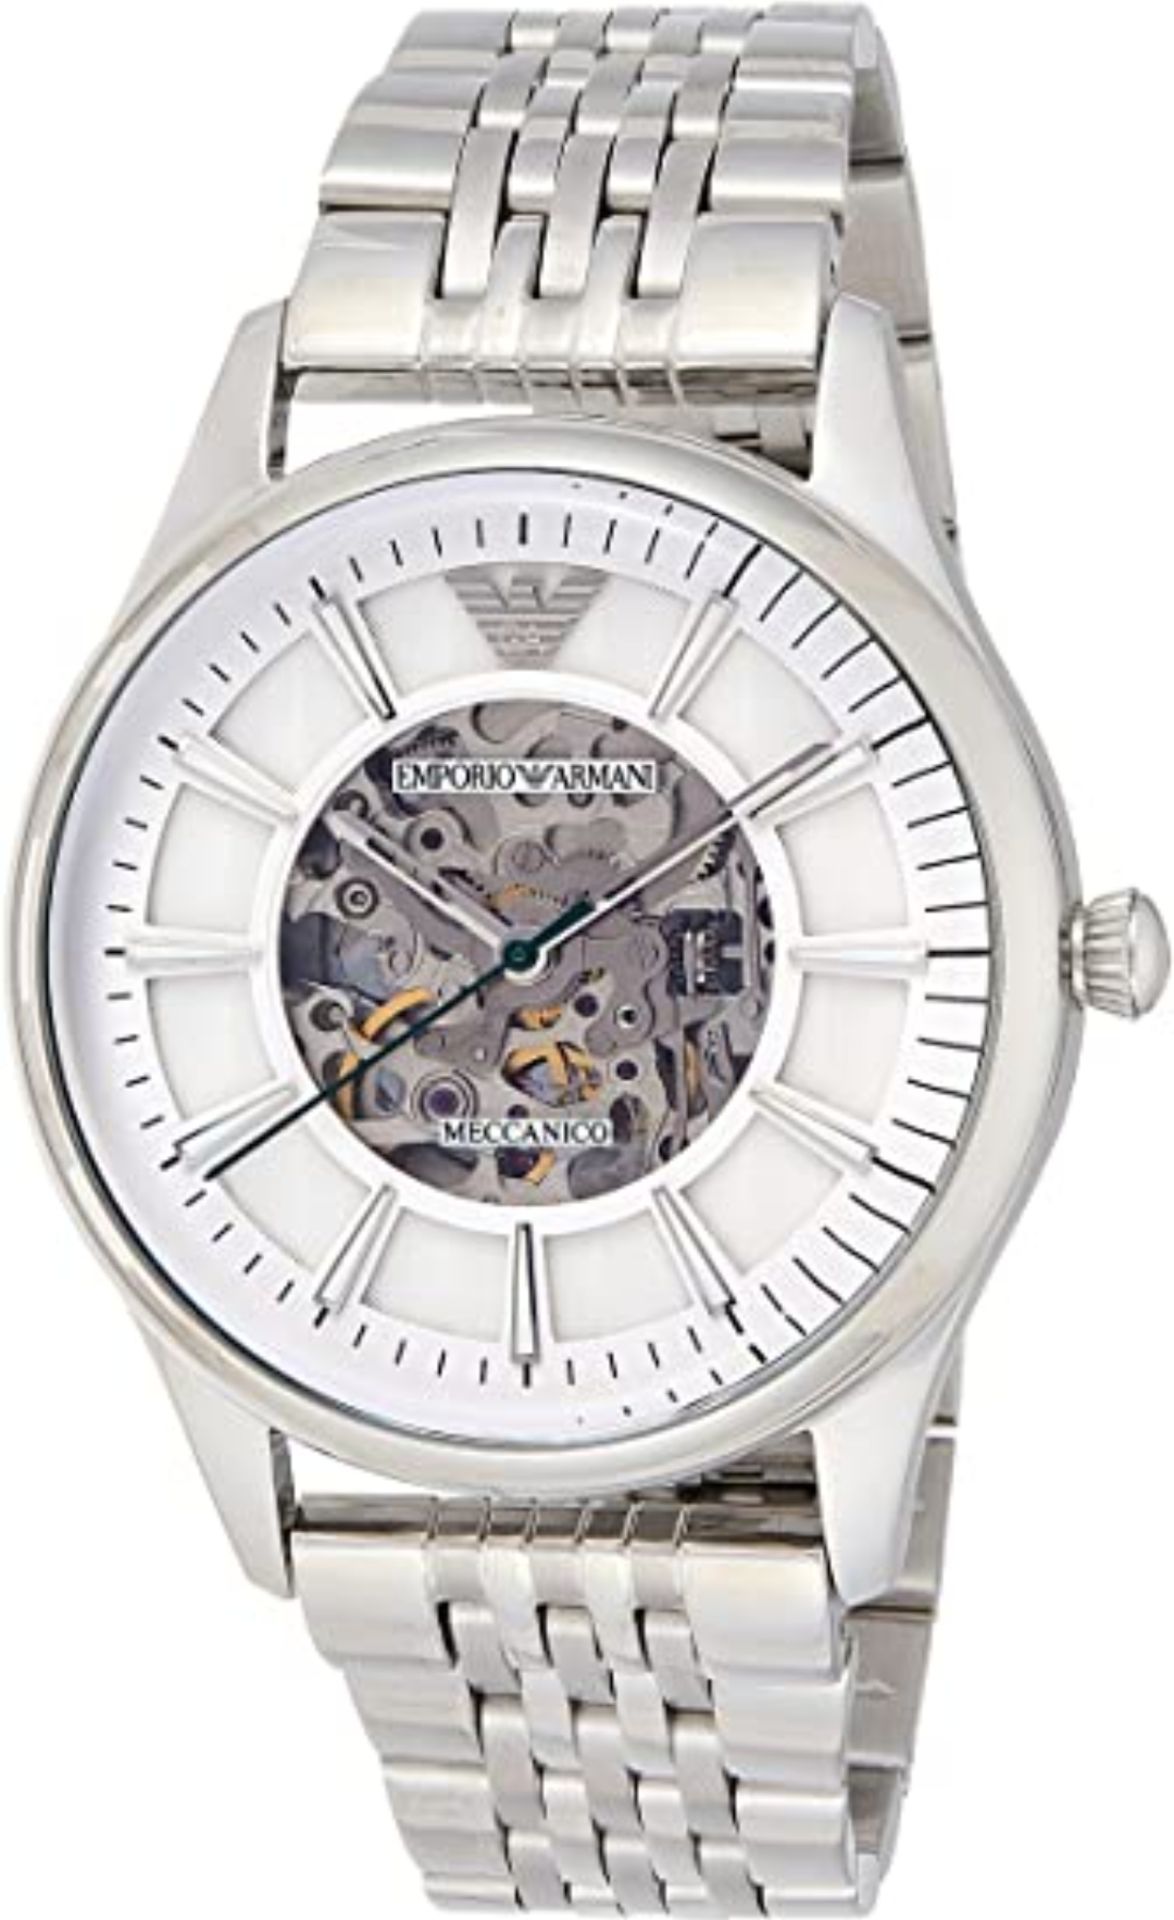 Emporio Armani AR1945 Men's Meccanico Silver Bracelet watch - Image 2 of 5